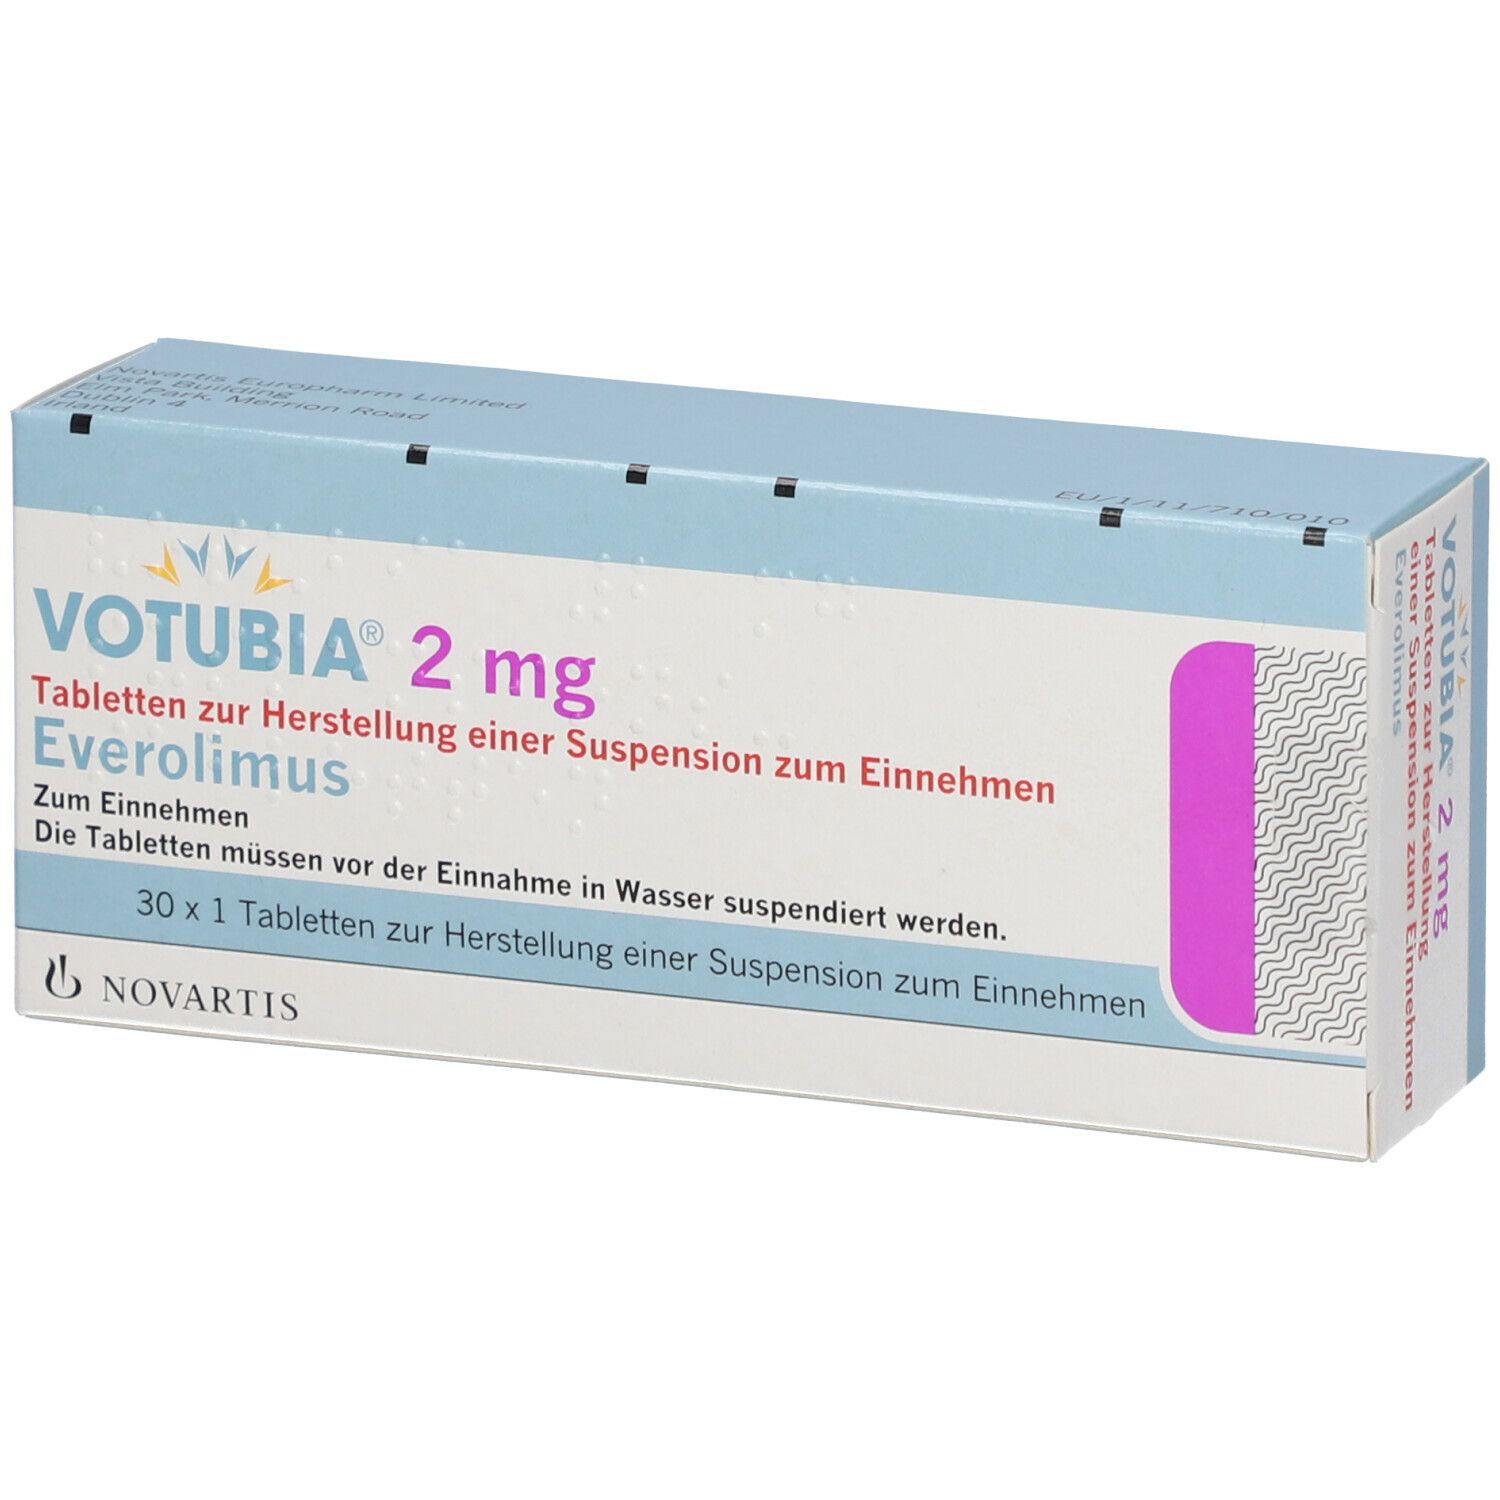 Votubia® 2 mg